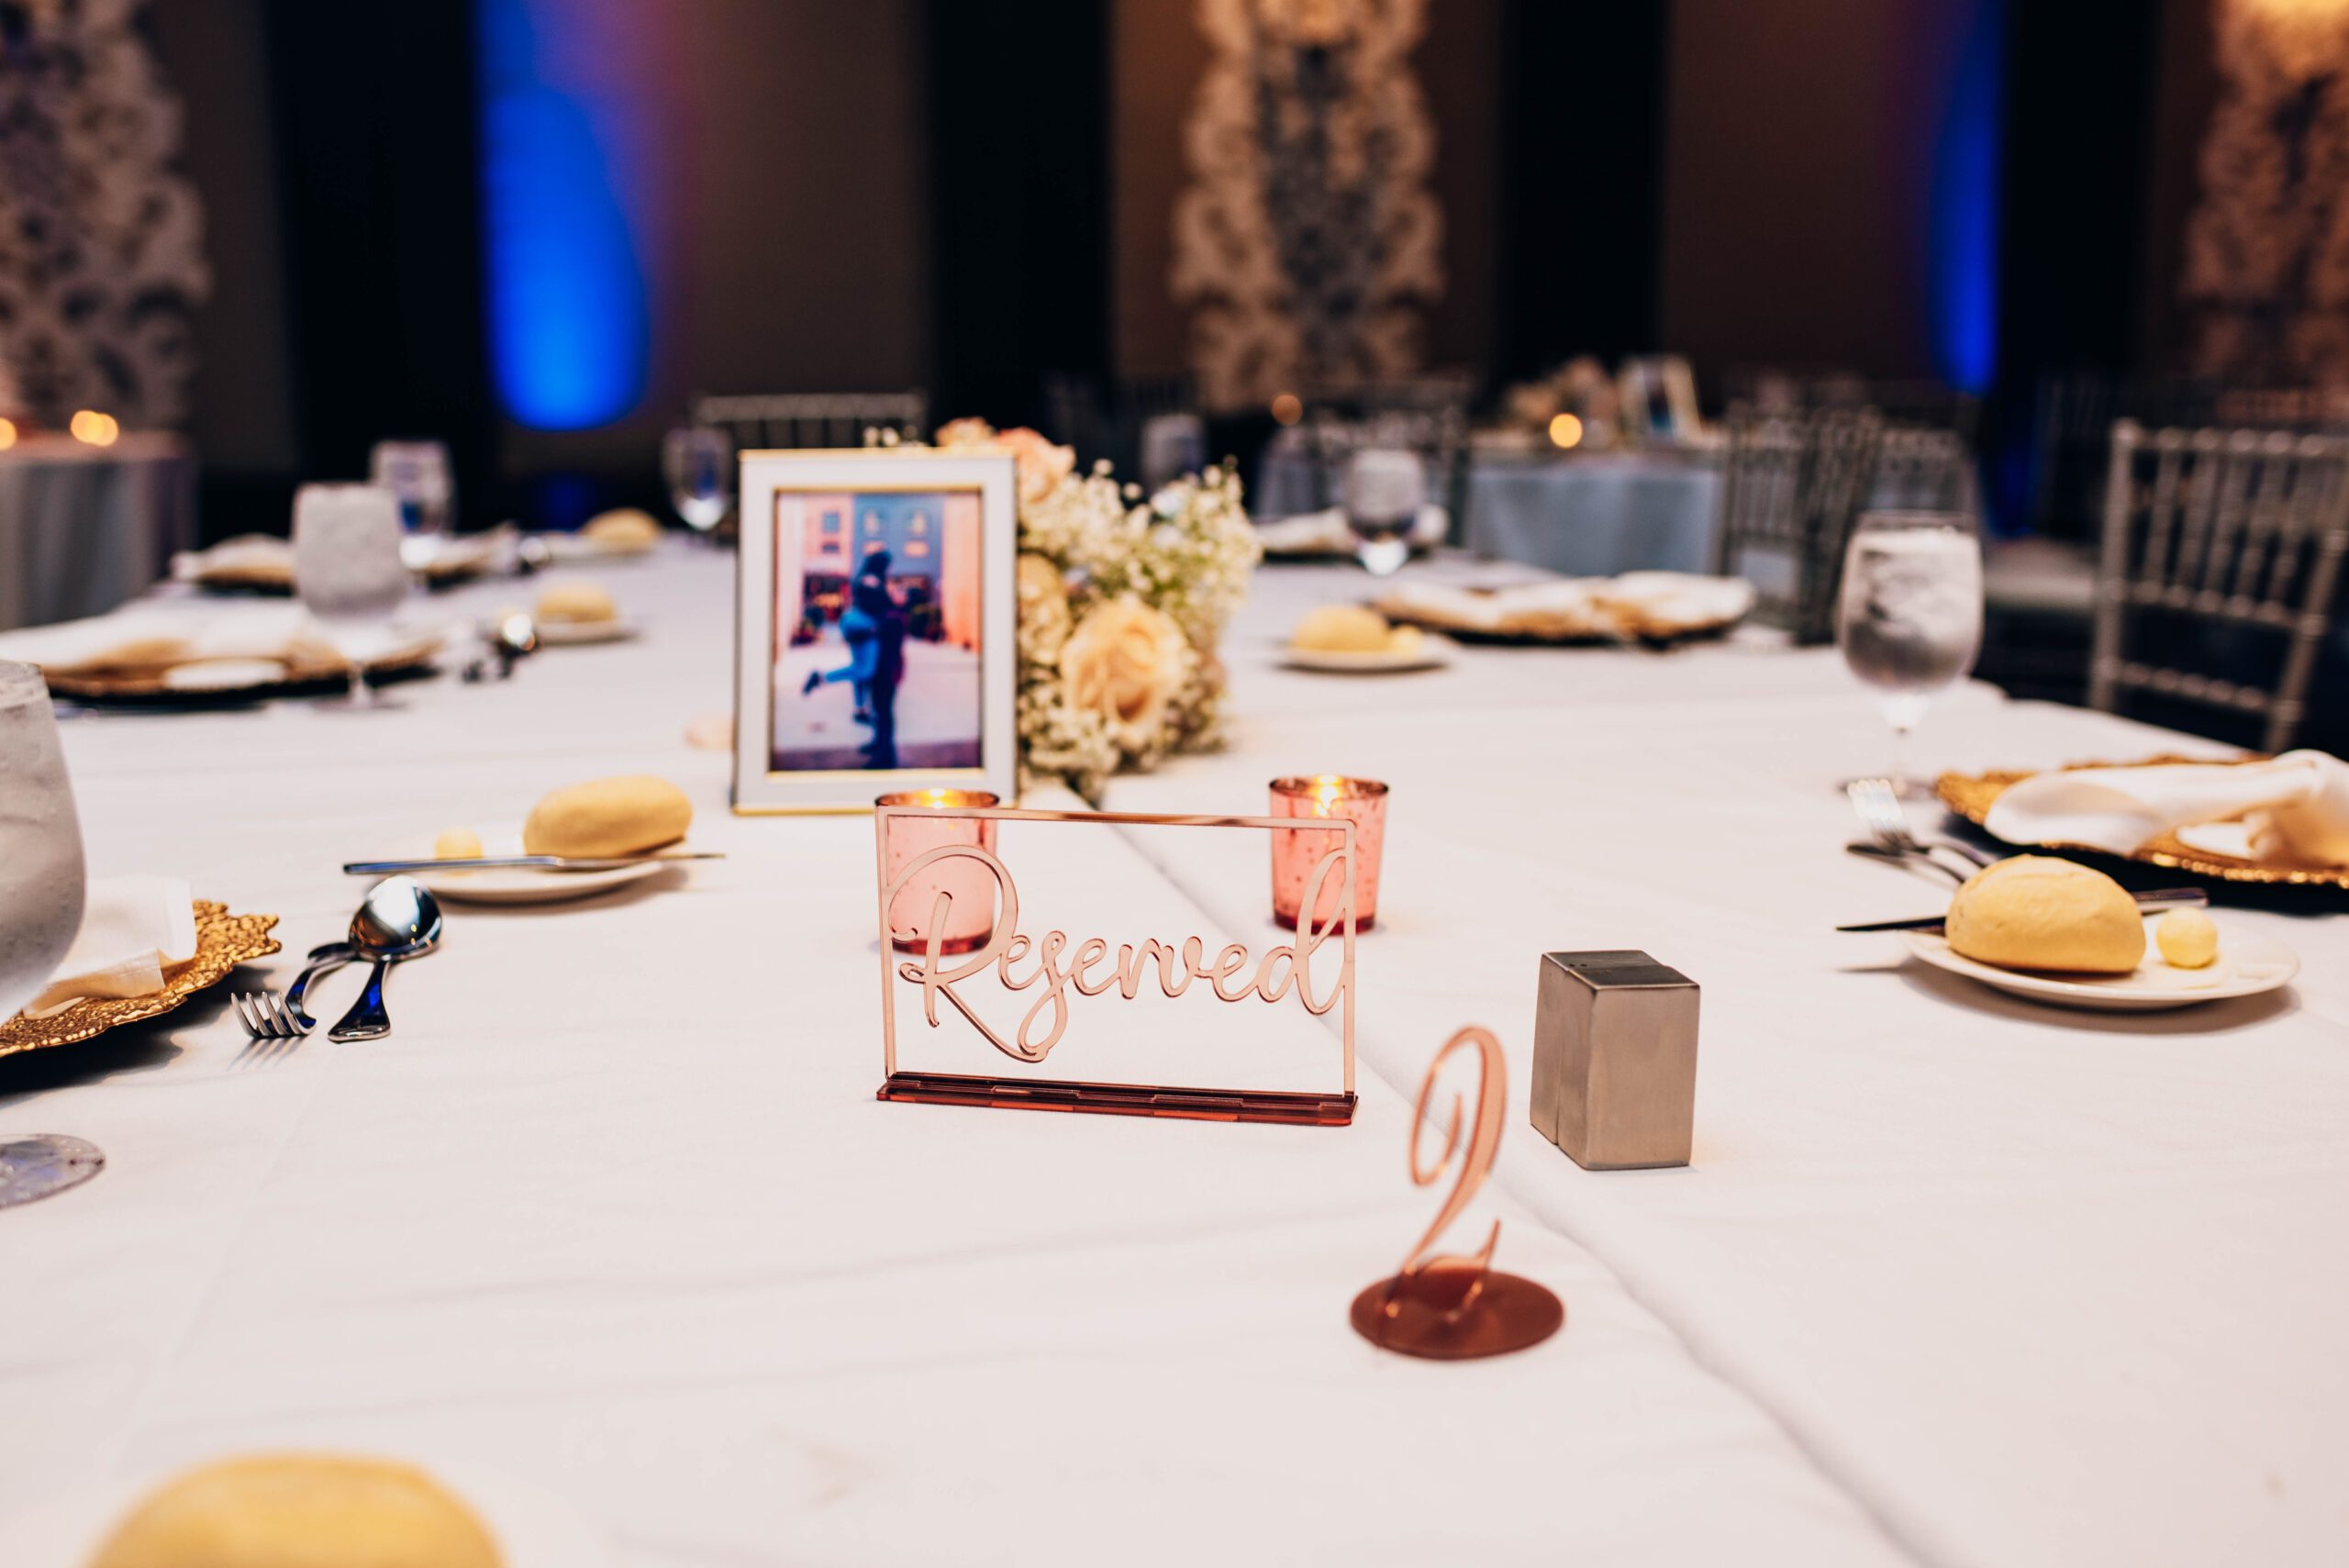 Table at wedding reception